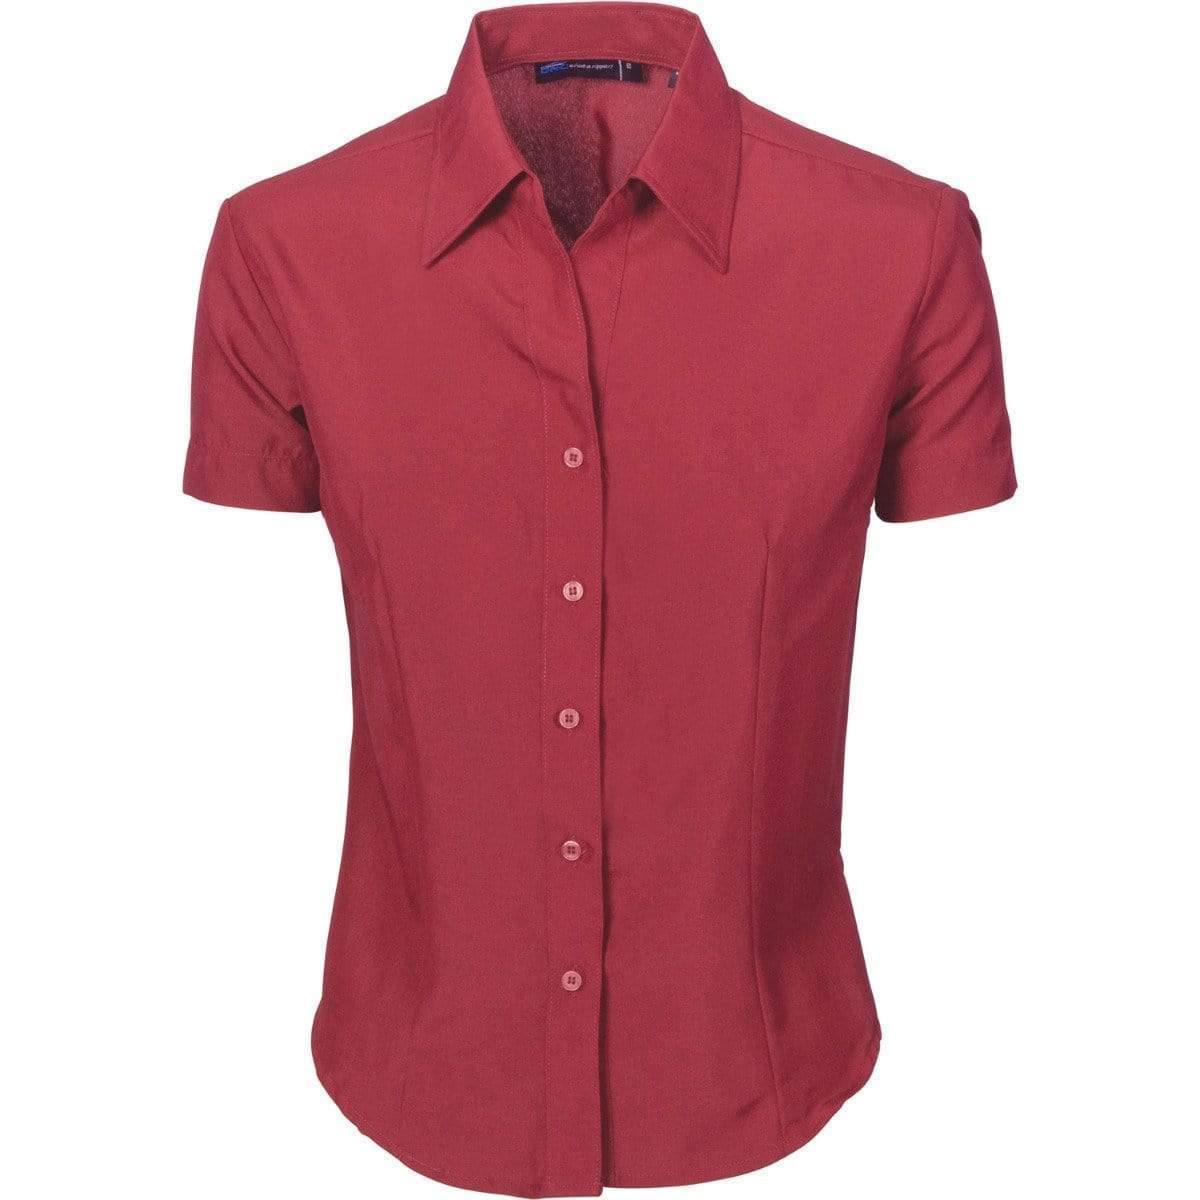 Dnc Workwear Ladies Cool-breathe Short Sleeve Shirt - 4237 Corporate Wear DNC Workwear Cherry 6 